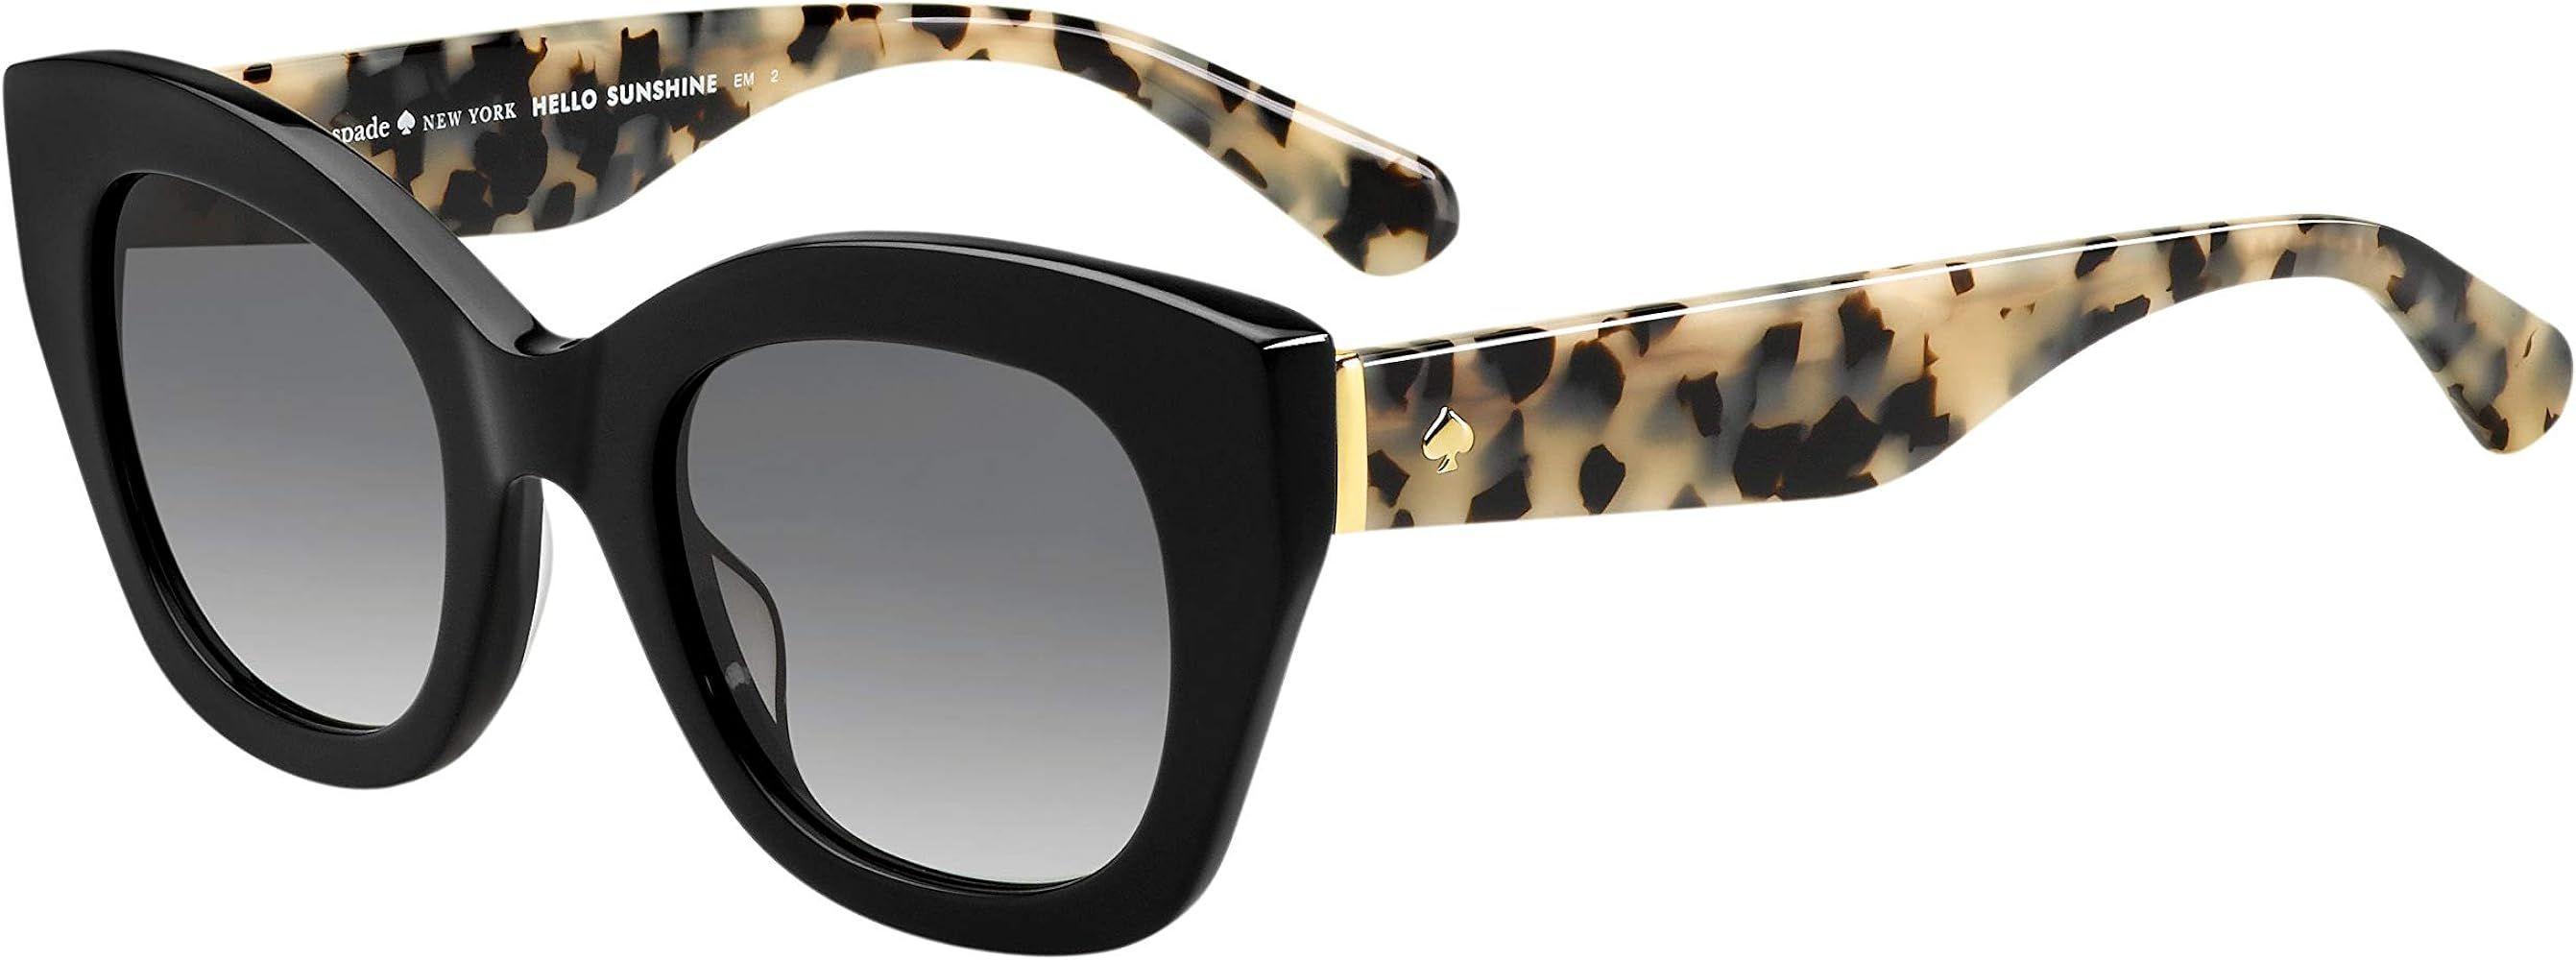 Kate Spade Sunglasses (Safilo Group) Women's Jalena Cat-Eye Sunglasses, BLK HAVAN, 49 mm | Amazon (US)